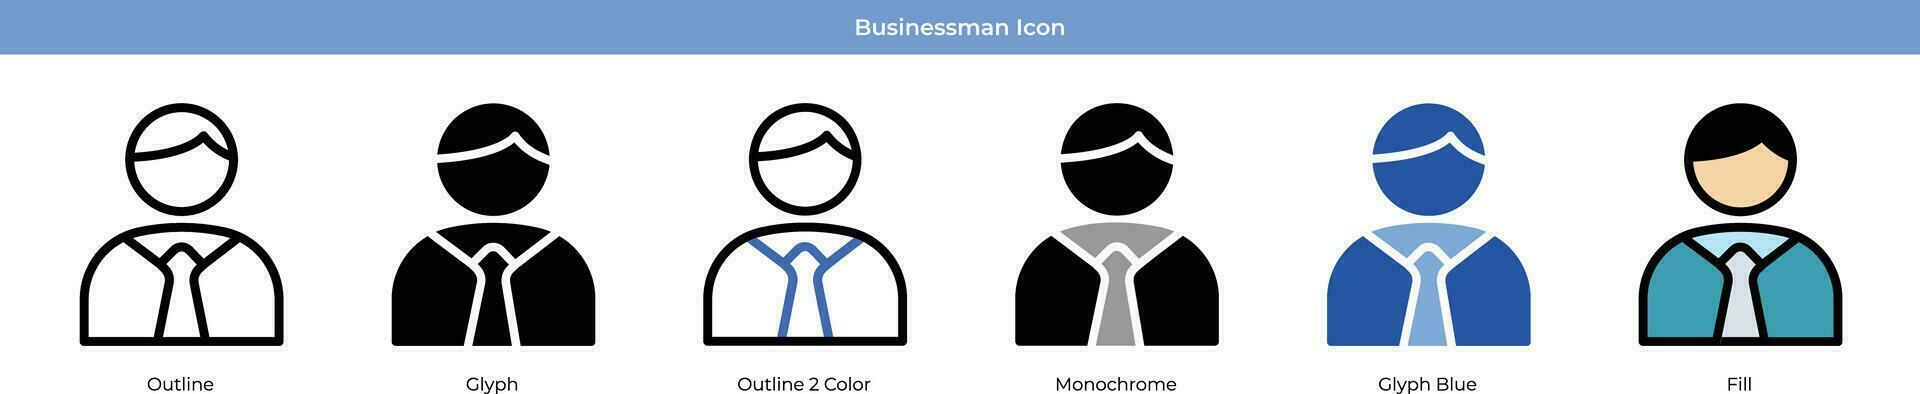 zakenman pictogramserie vector